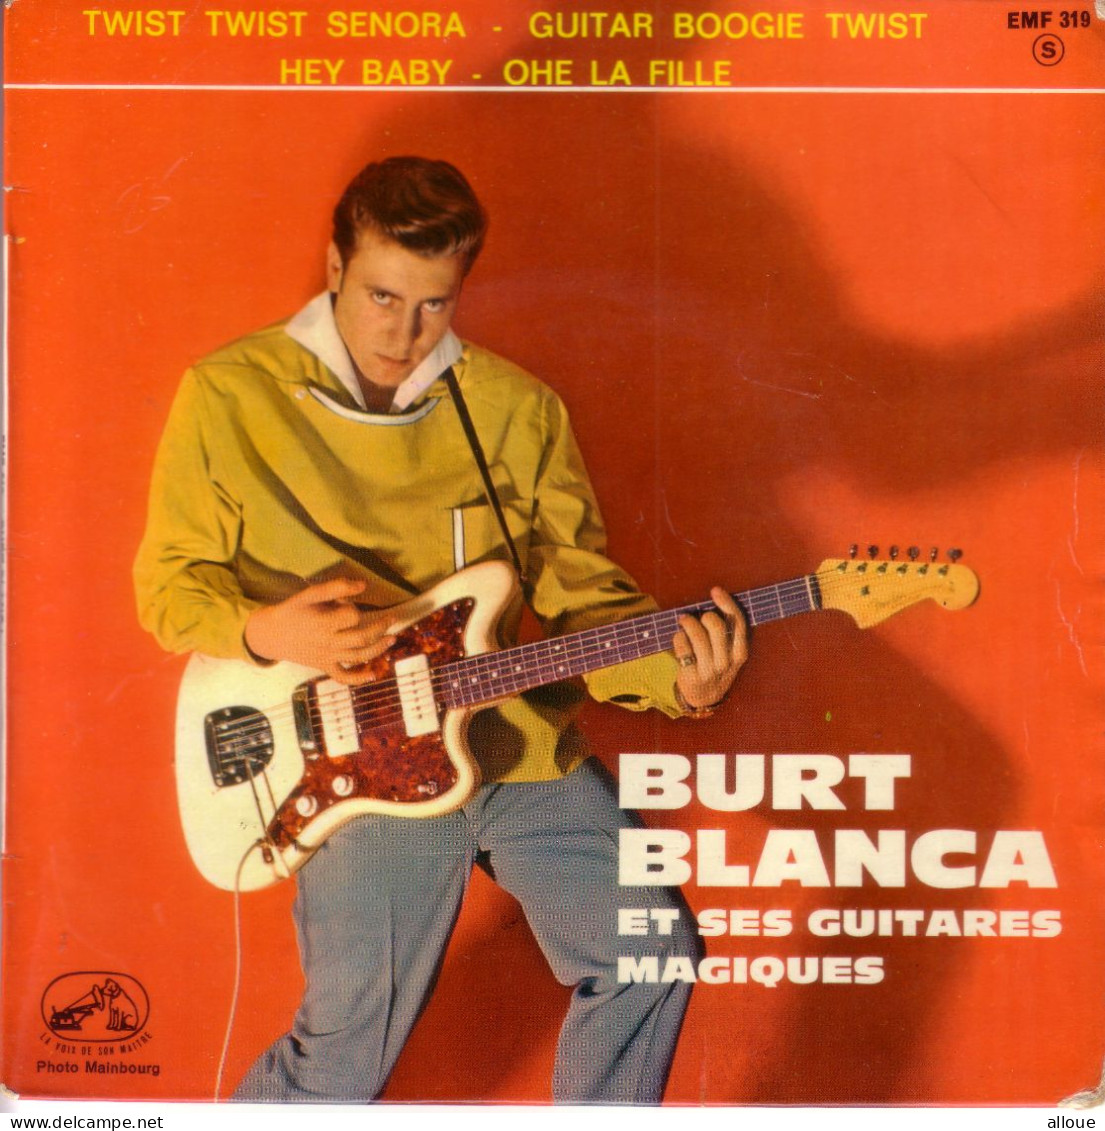 BURT BLANCA ET SES GUITARES - FR EP TWIST TWIST SENORA + 3 - Rock